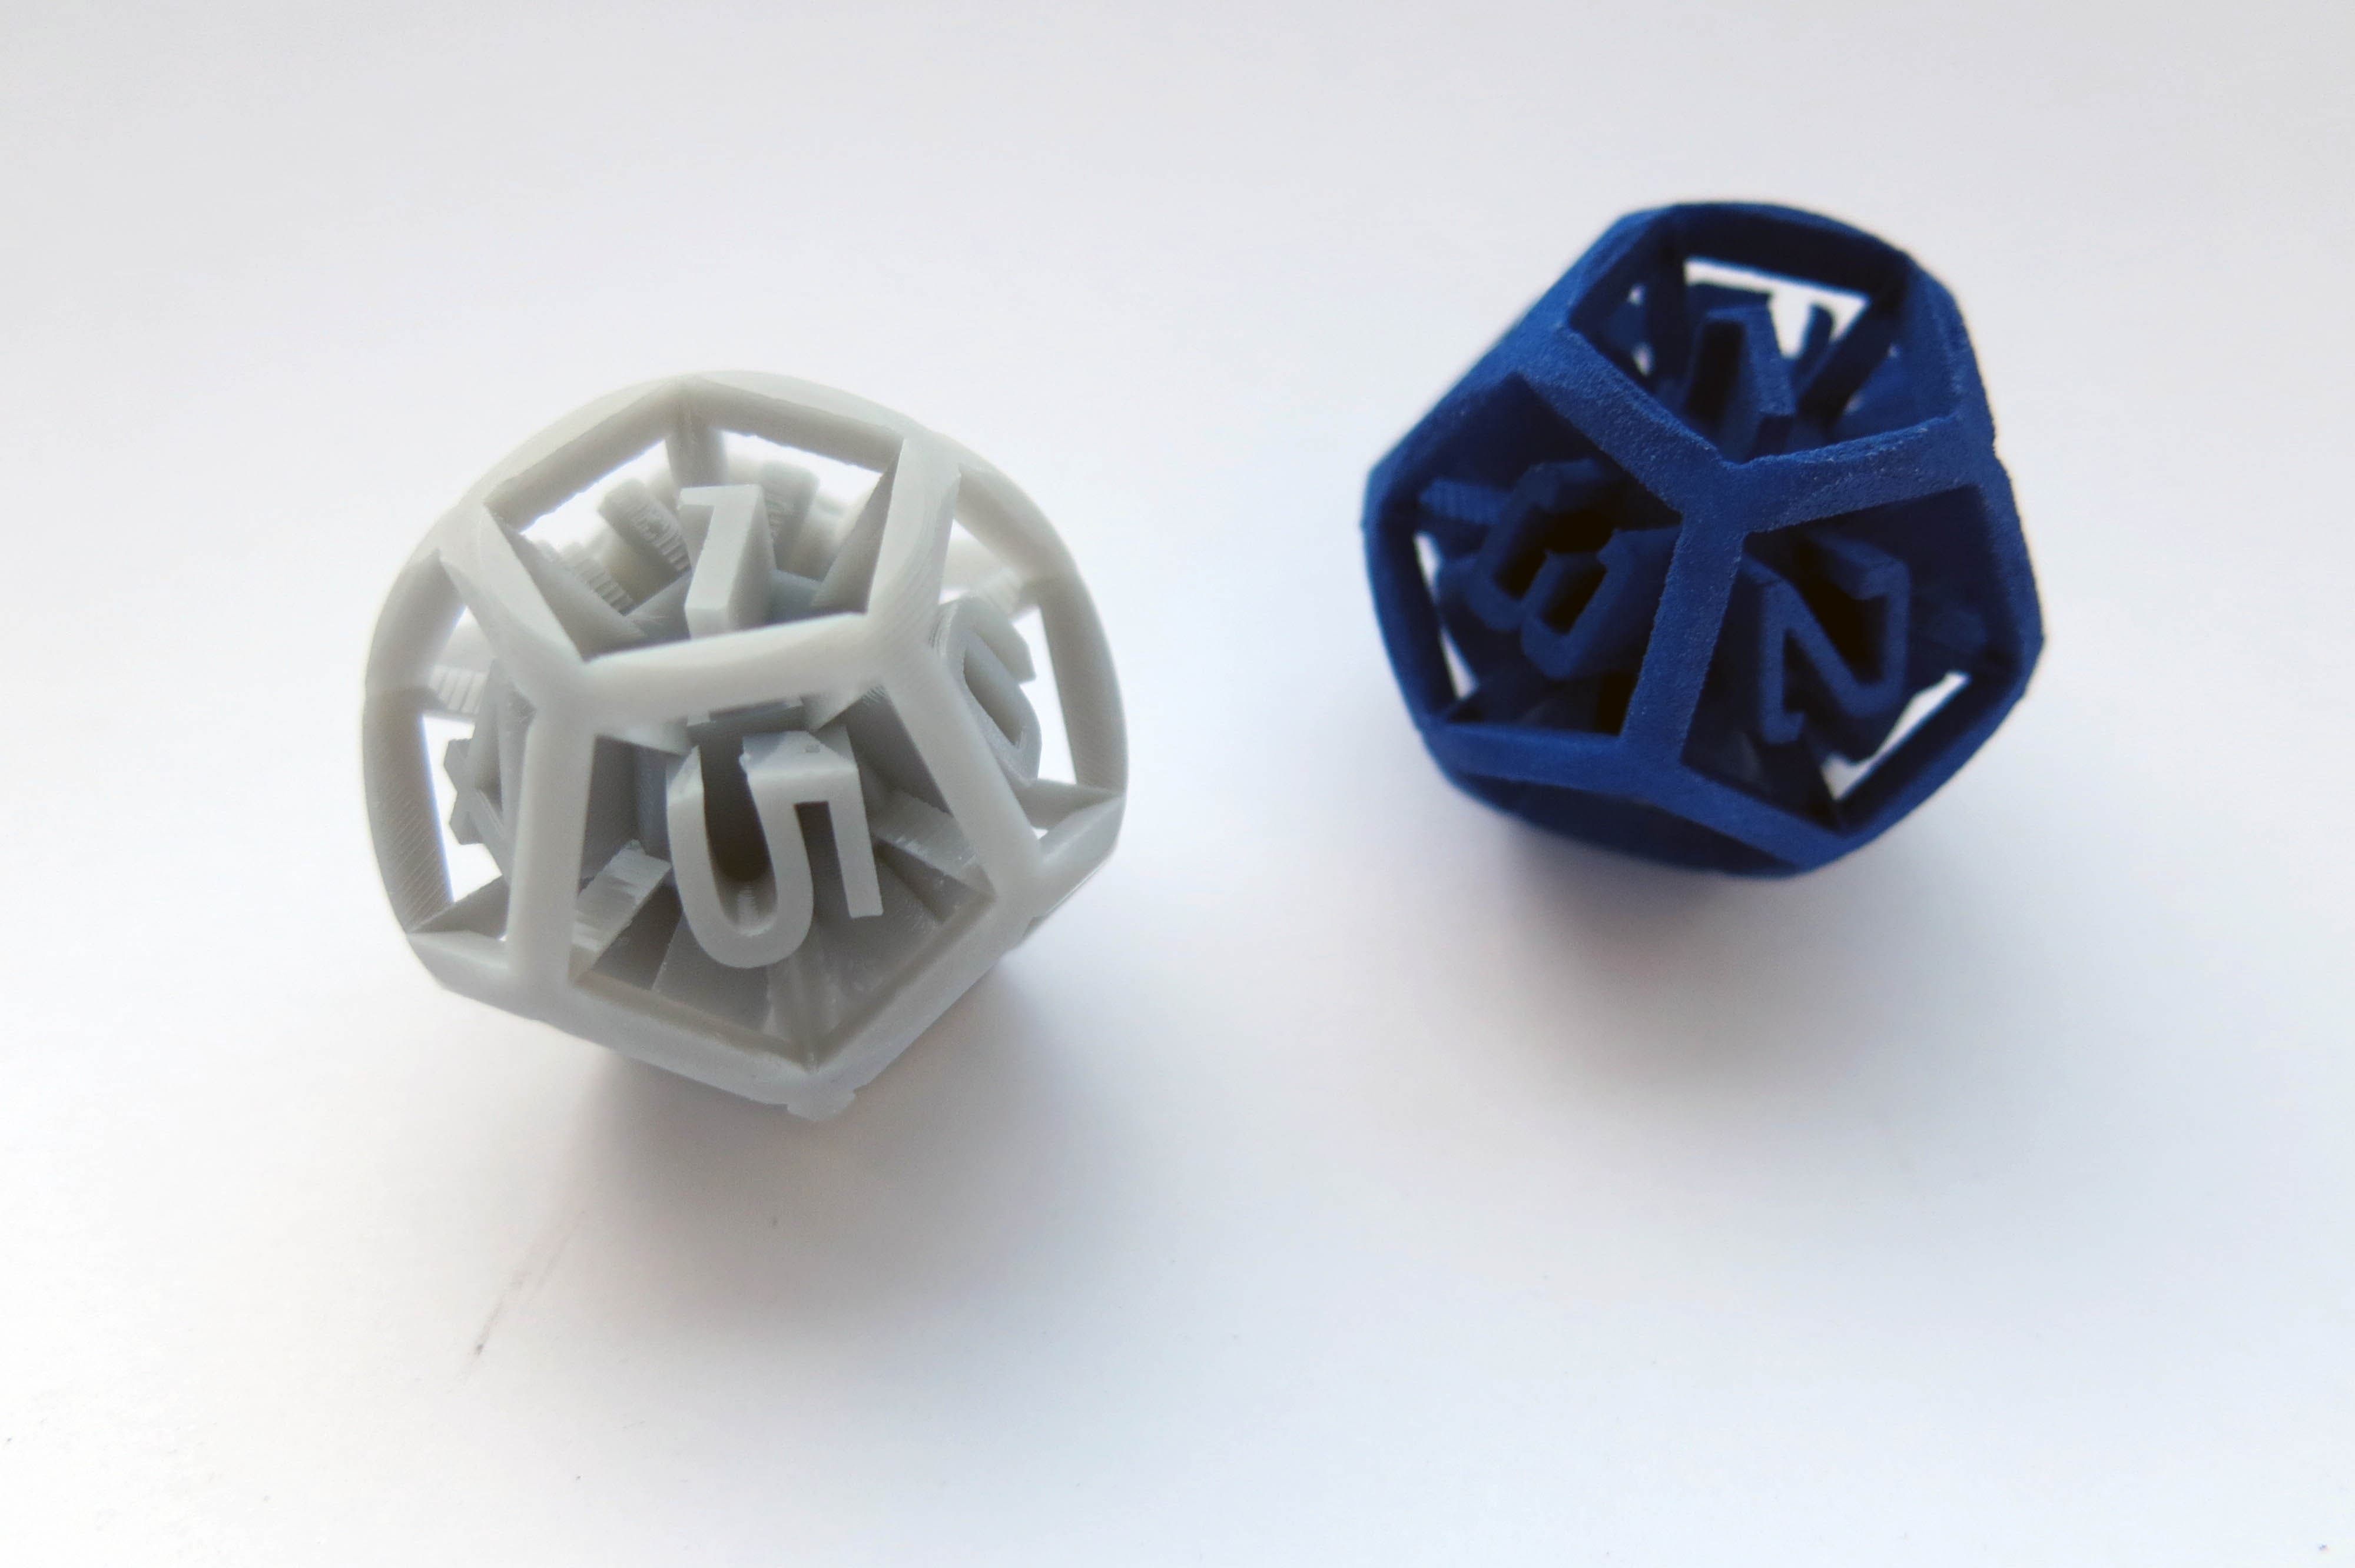 3D printing technology: SLA vs SLS